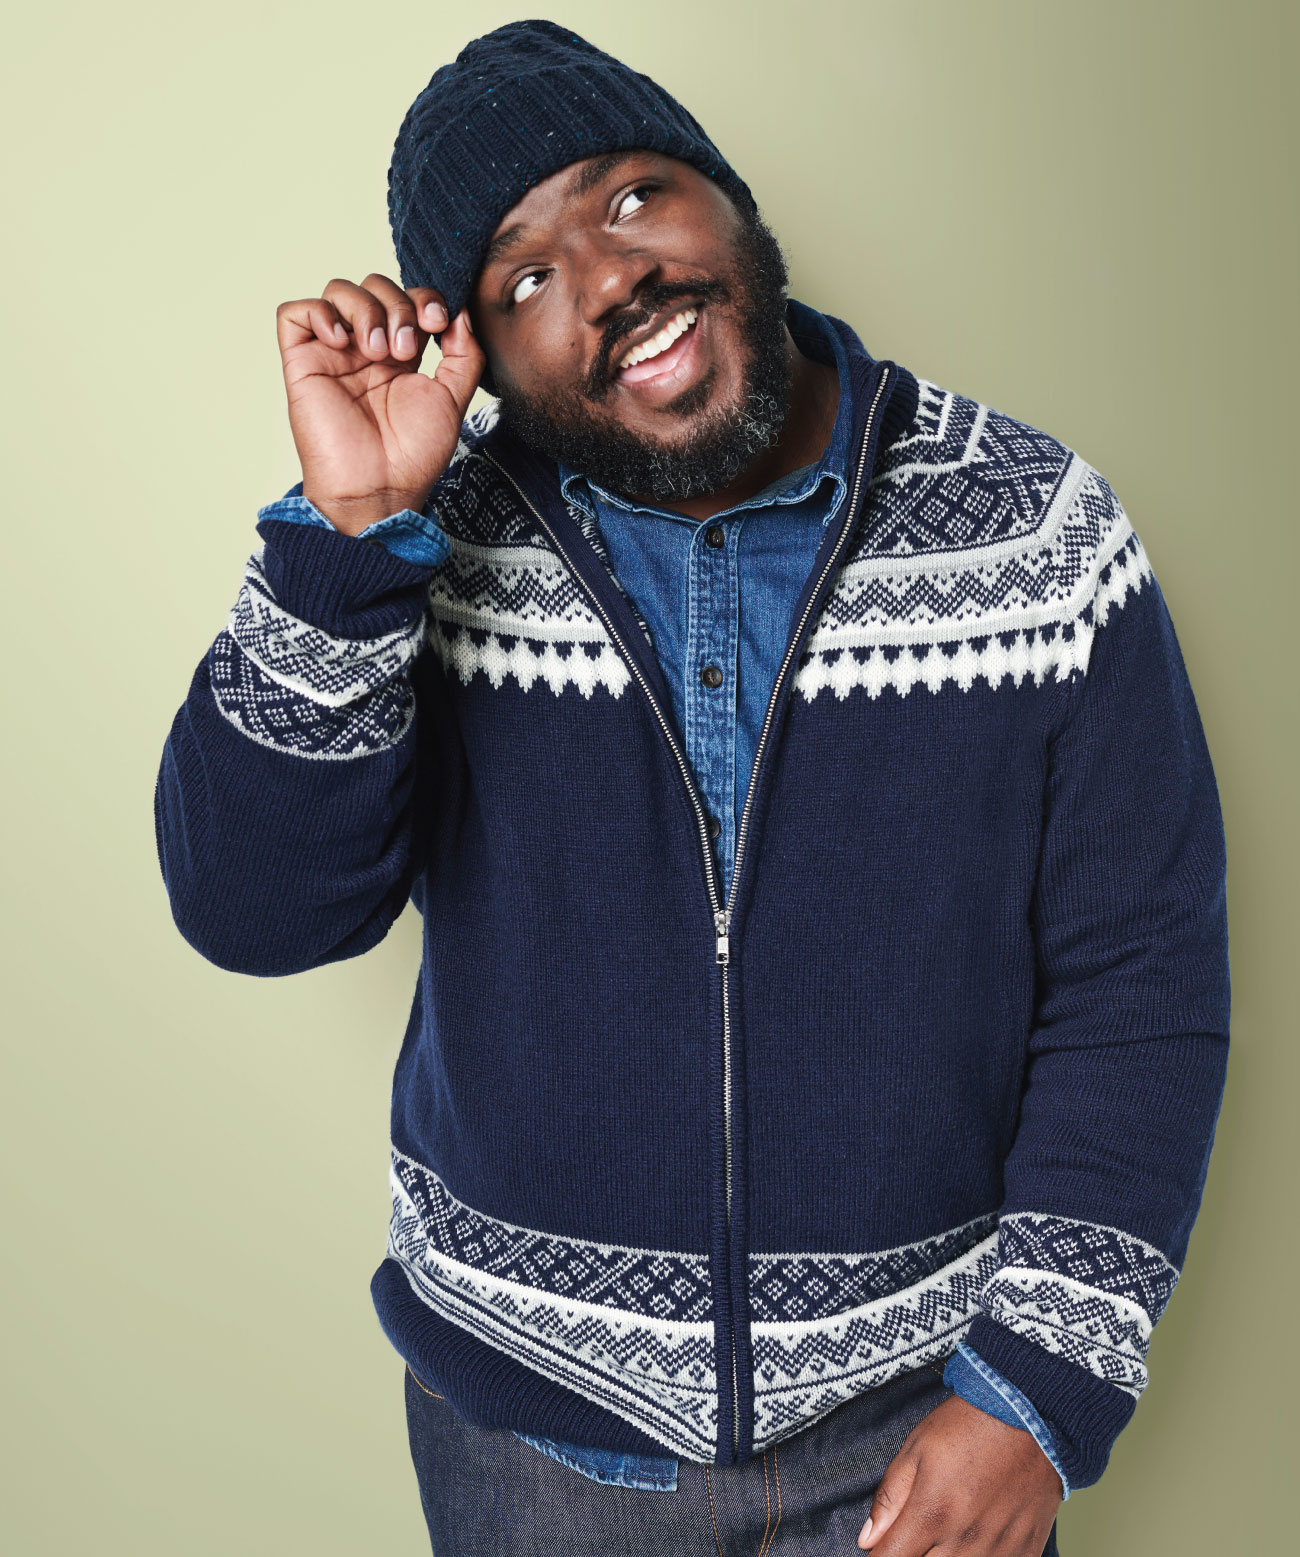 black man with beard wearing navy blue hat, blue zip-up sweater and denim shirt